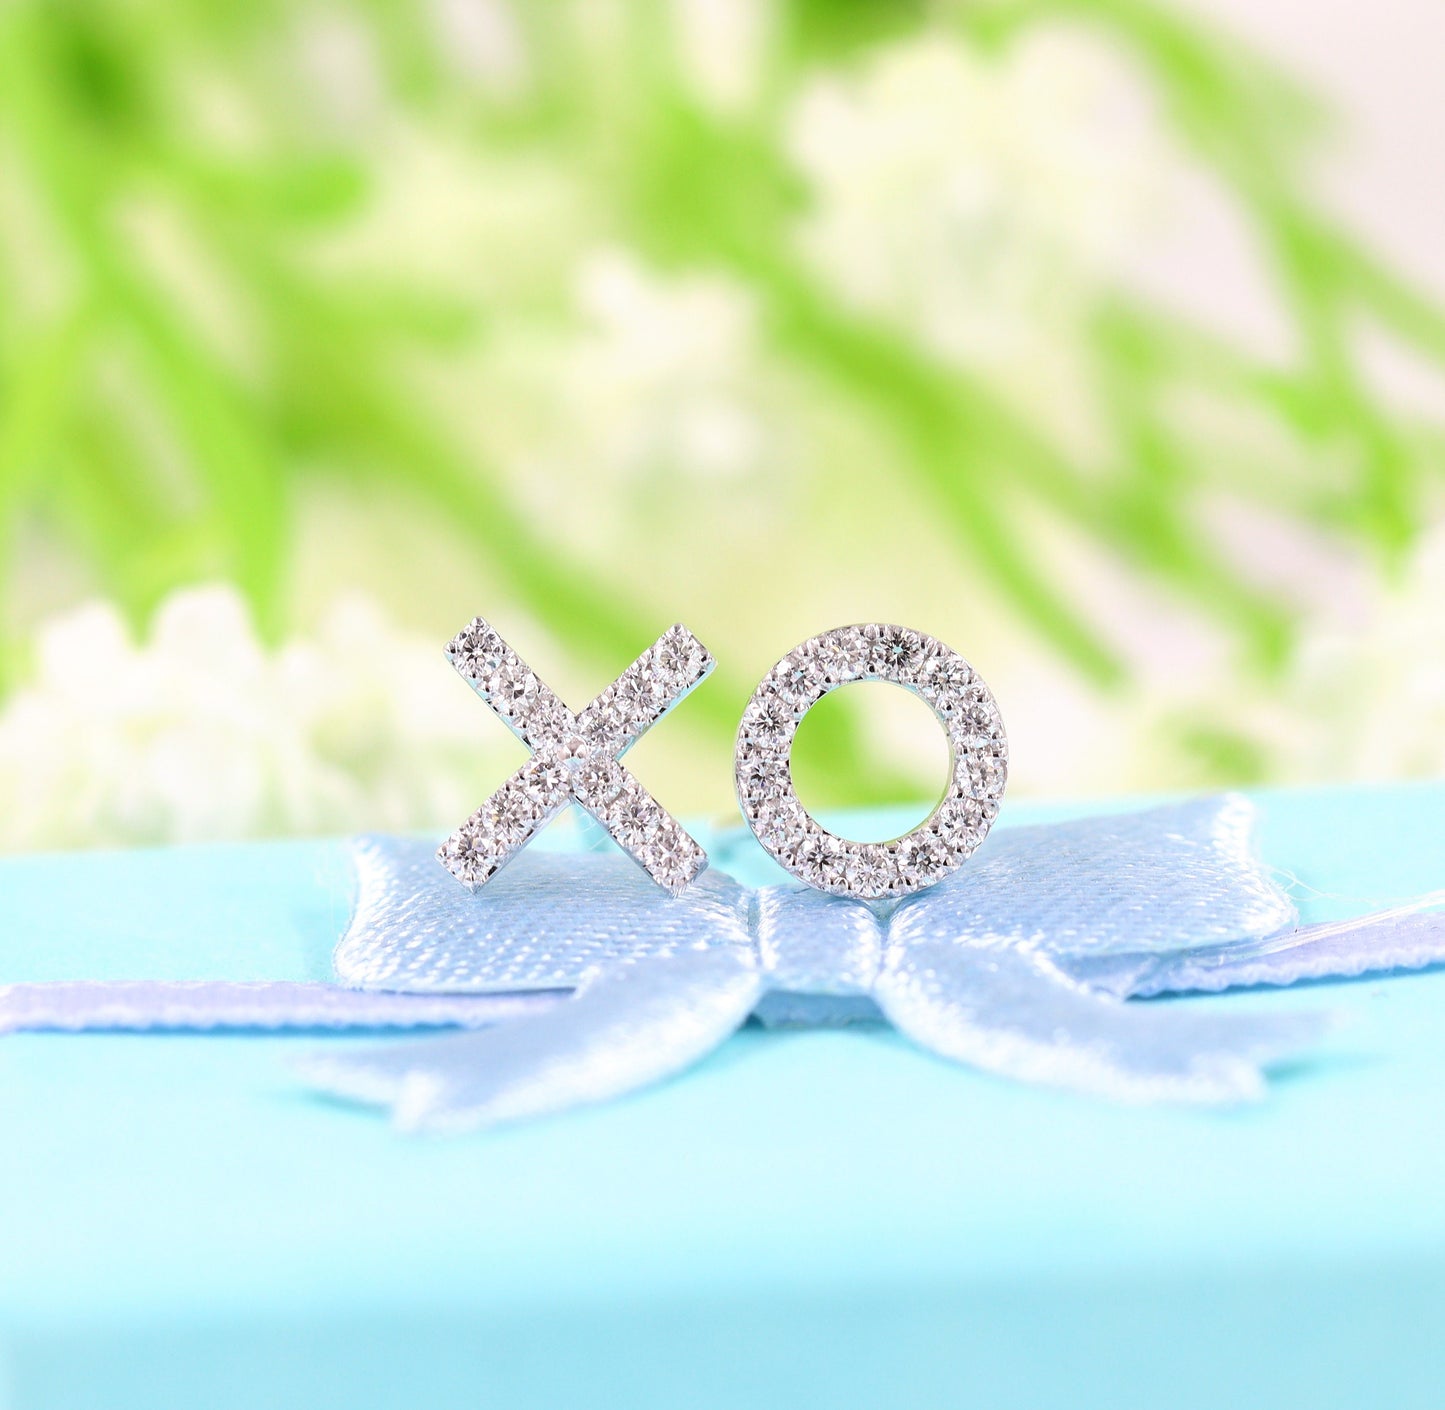 Diamond  O & X  Earrings / Stud Circle  Earrings / 14k gold Dainty Earrings / Minimalist Diamond Earrings / Gifts for her / Gifts / Diamond